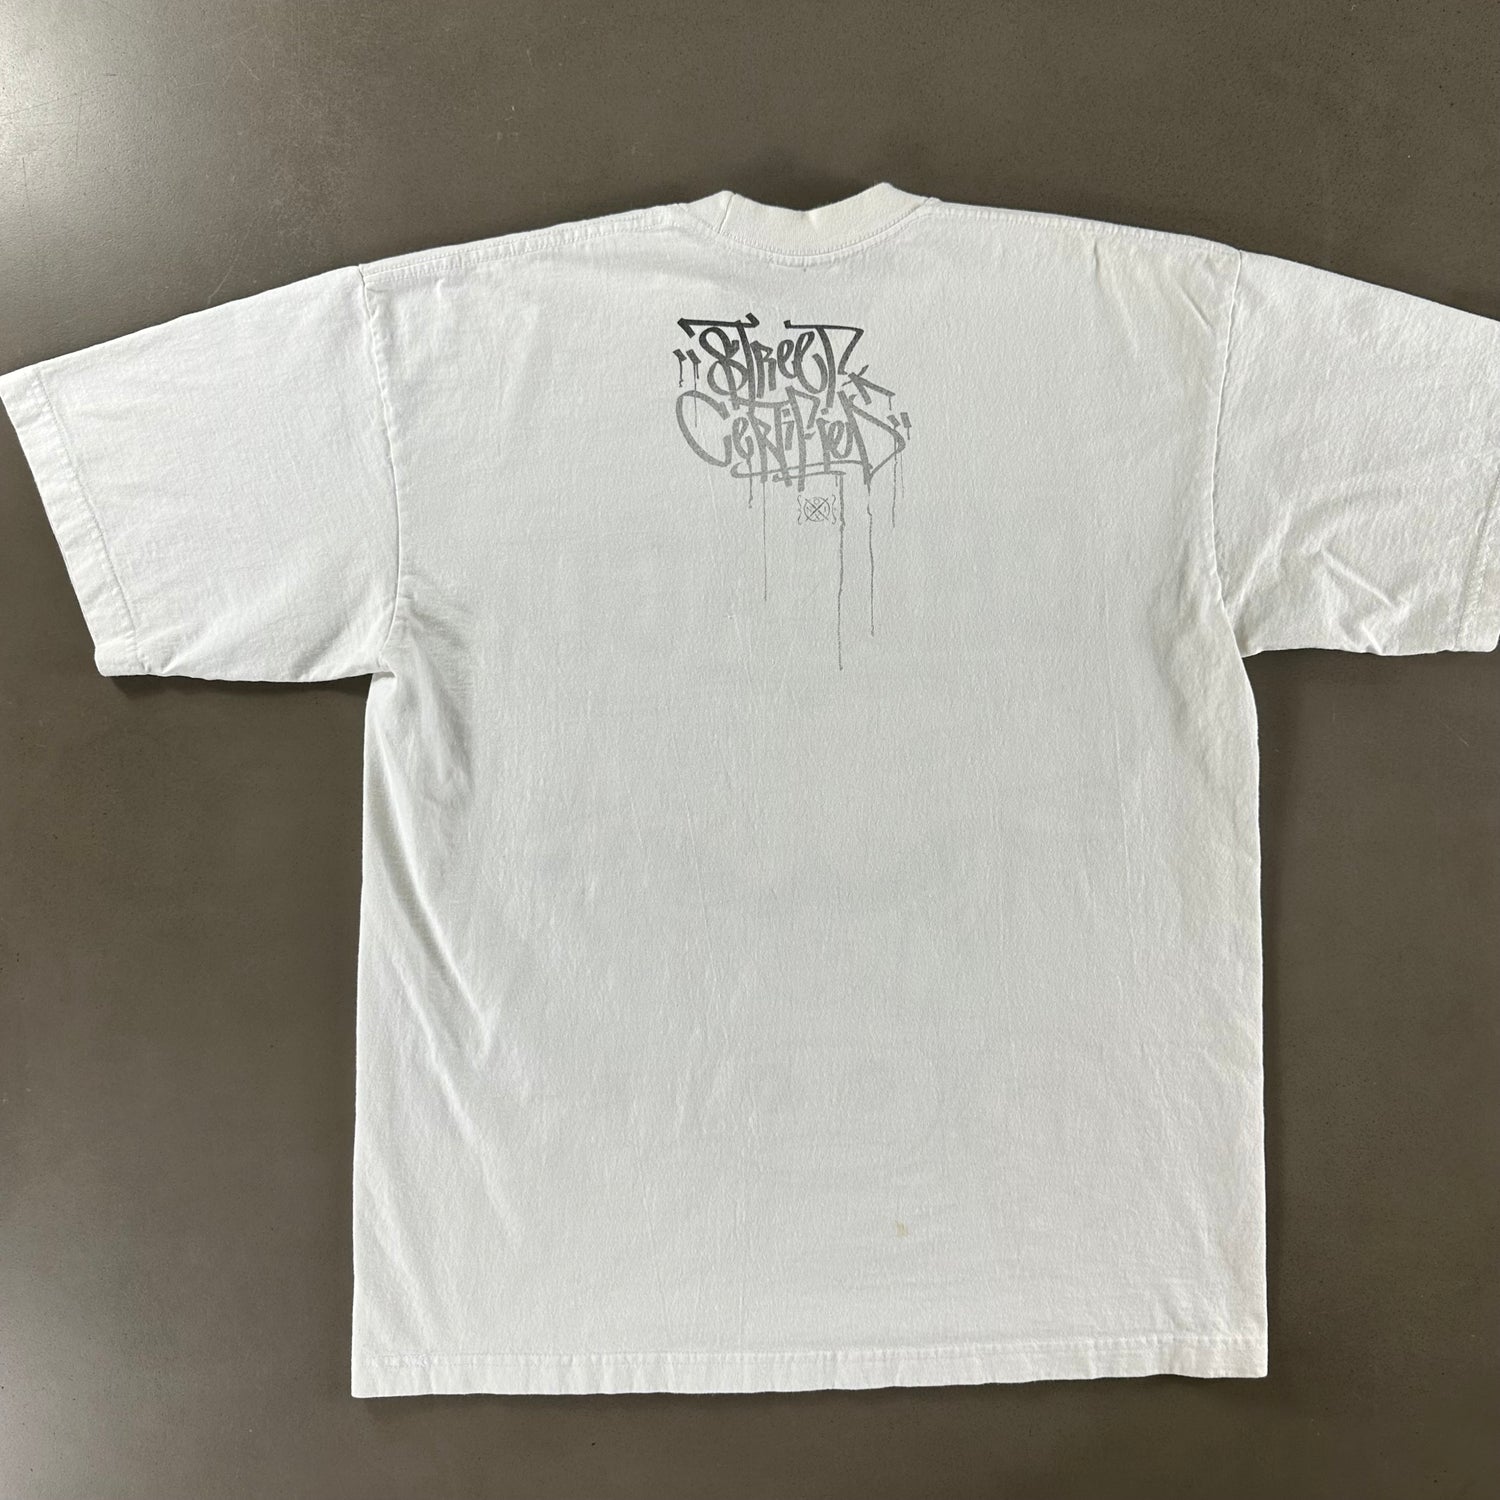 Vintage 1998 Chicago Bulls T-shirt size XL